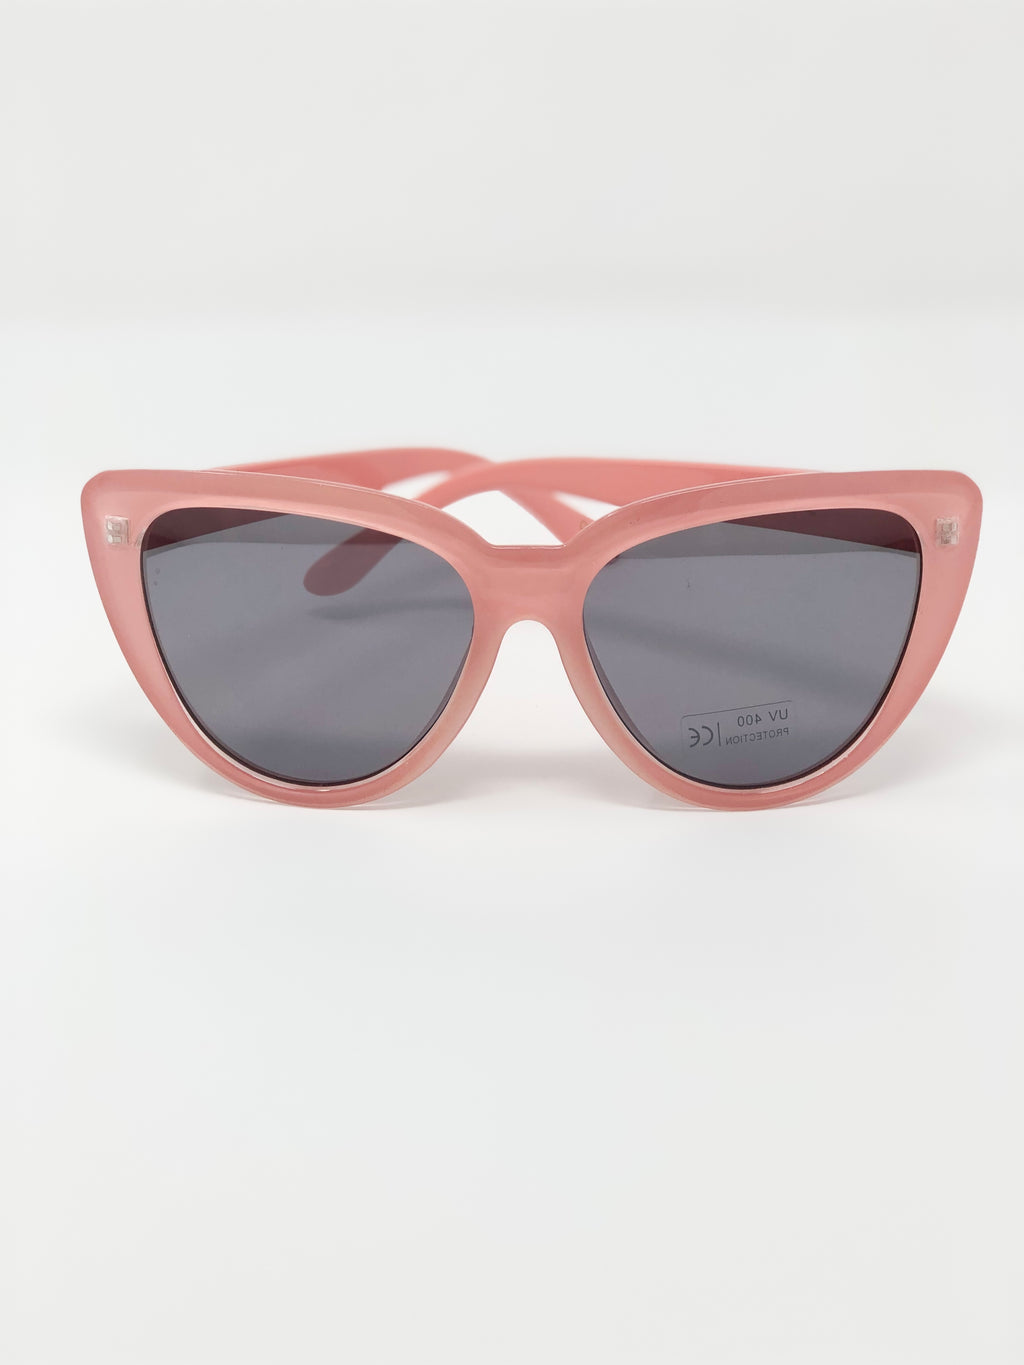 Salmon Pink Sunglasses